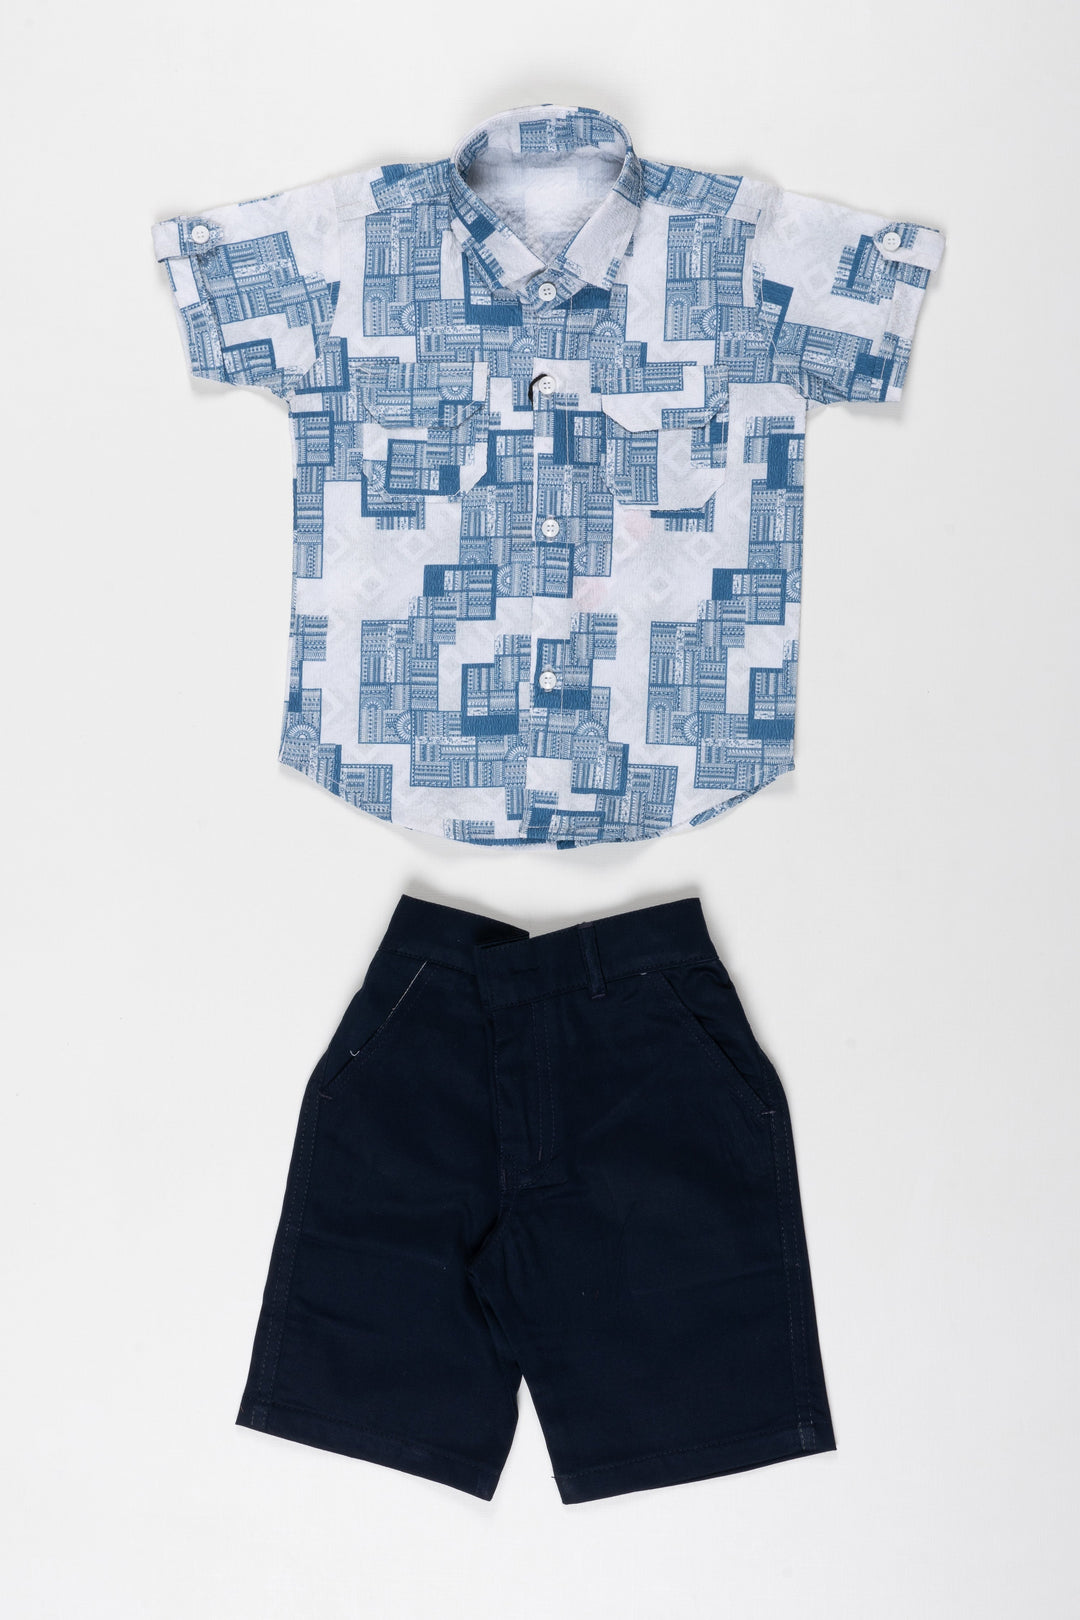 The Nesavu Boys Casual Set Urban Architect Boys Printed Shirt and Shorts Set Nesavu 18 (2Y) / Blue / Popcorn Polysilk BCS015A-18 Boys Architectural Print Shirt  Black Shorts | Modern Casual Kids Wear | The Nesavu